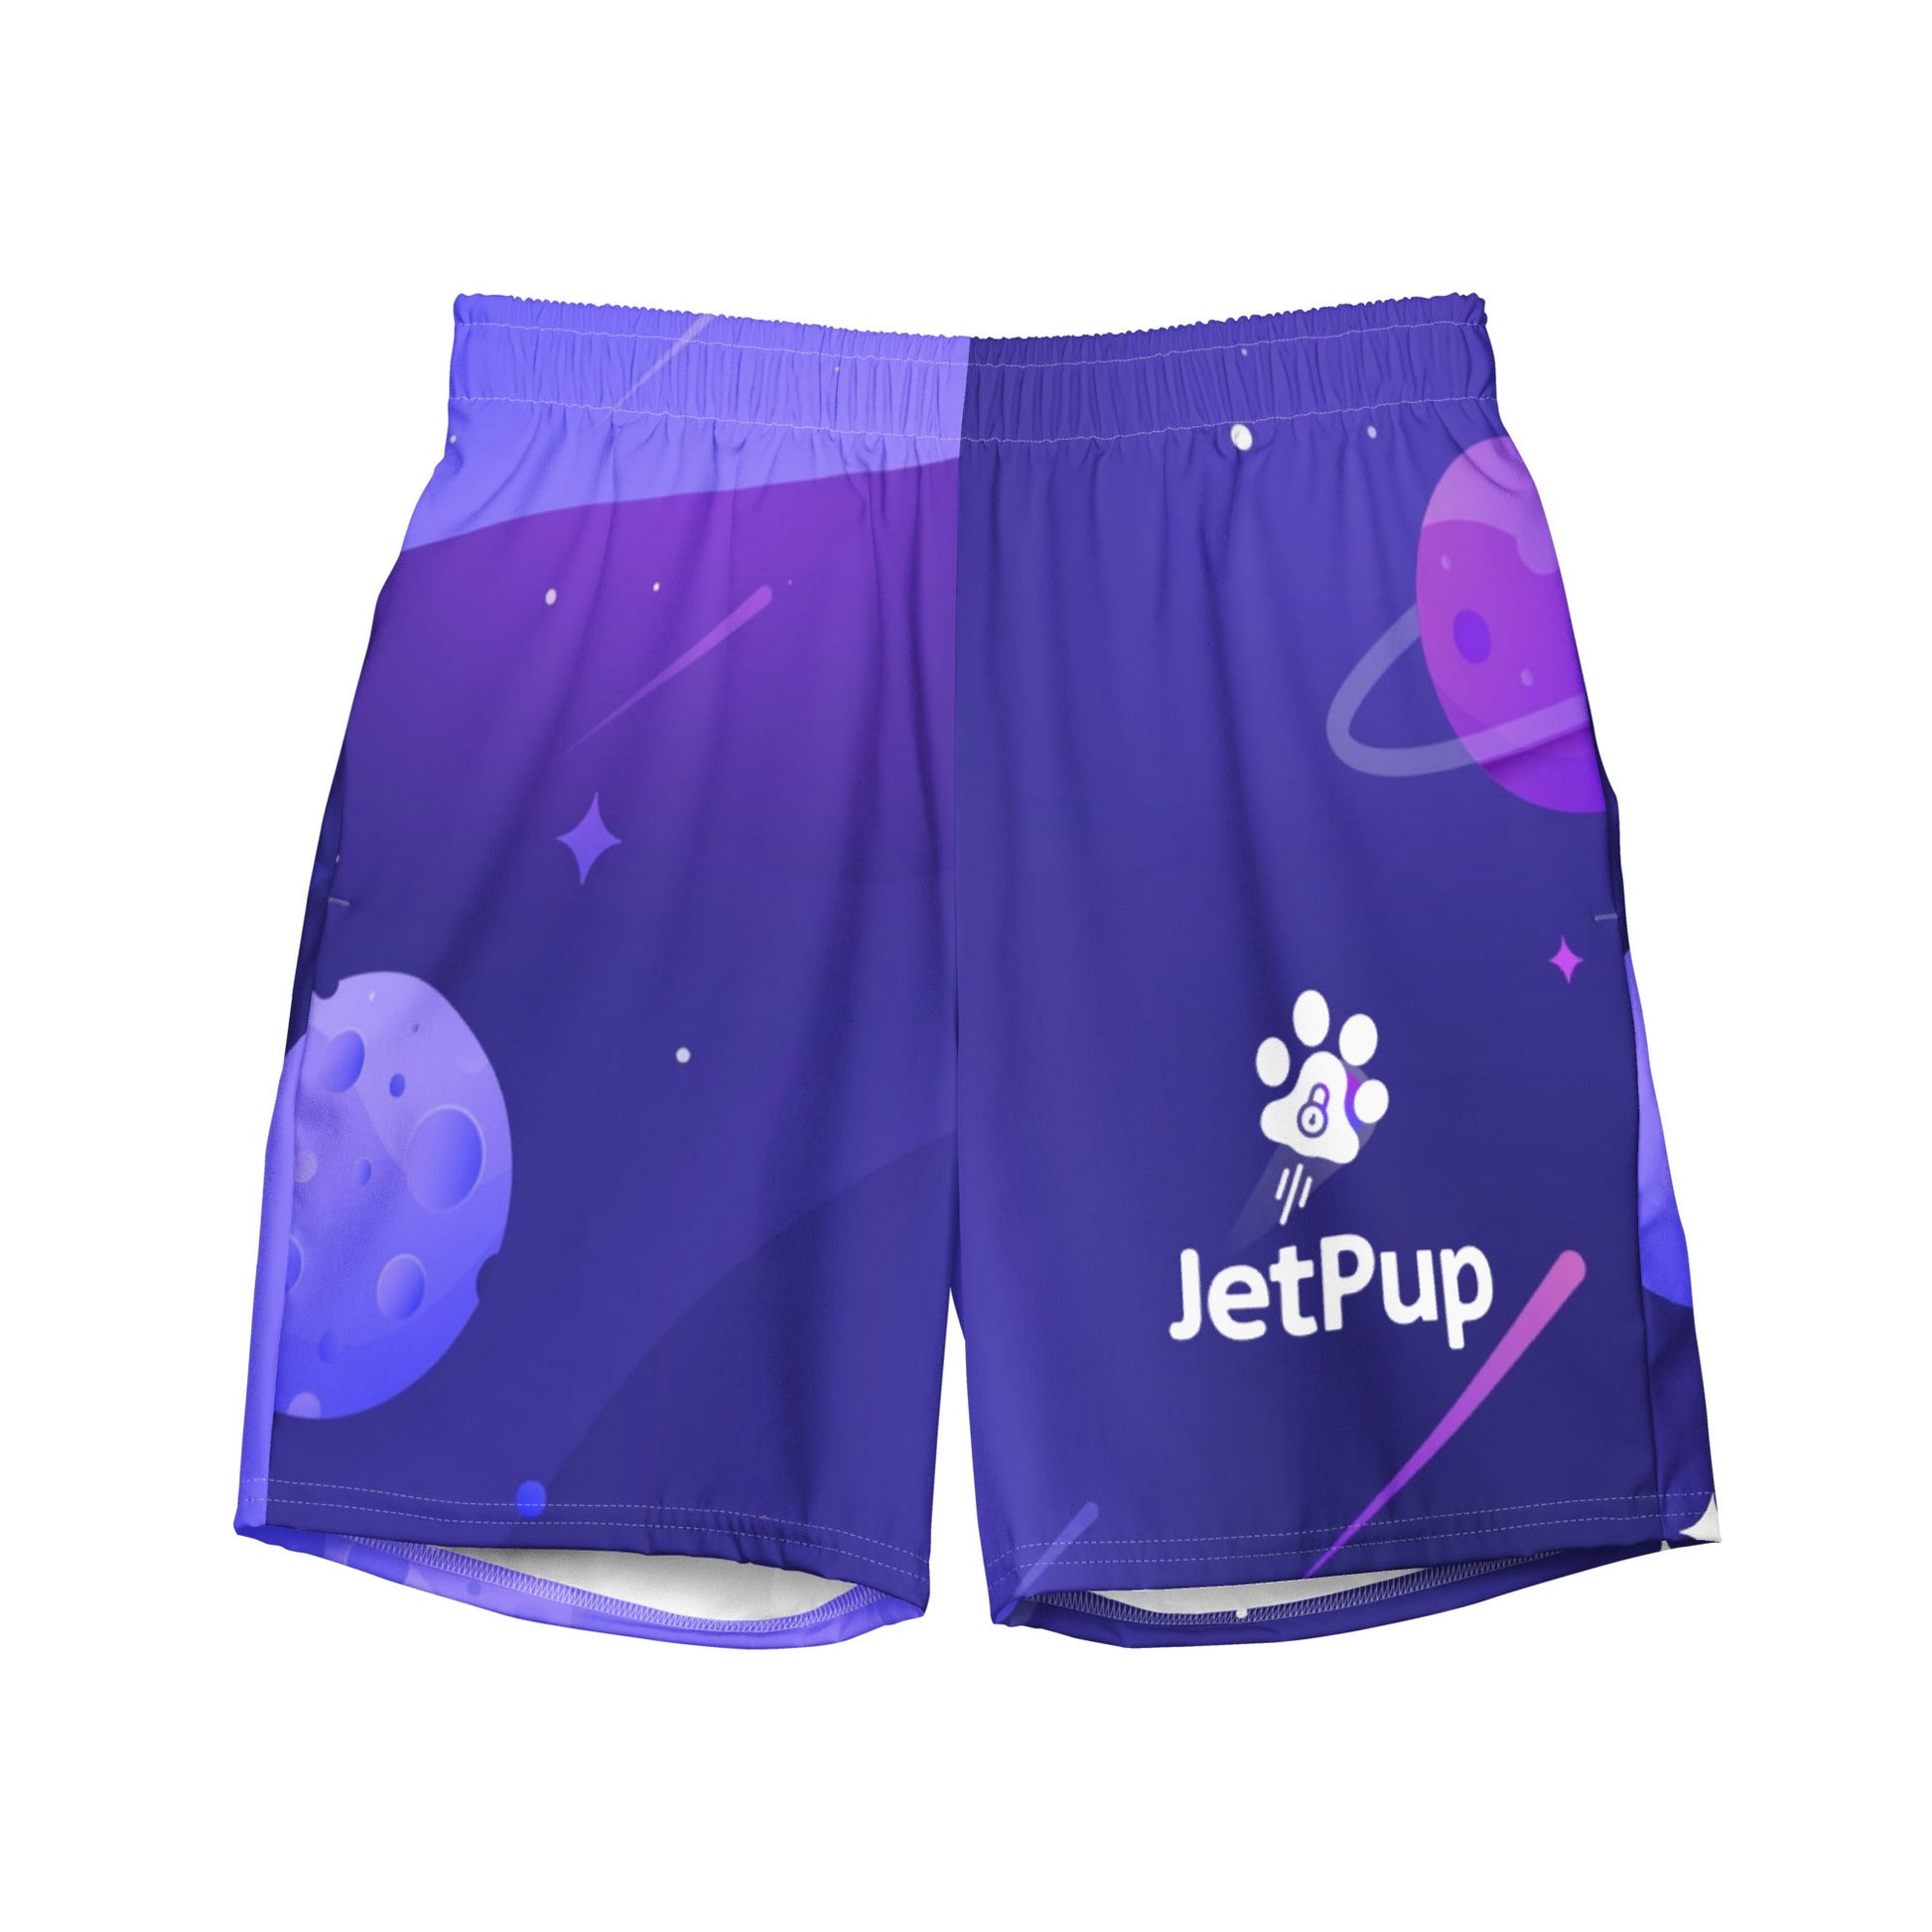 JetPup Branded Swim Trunks - JetPup